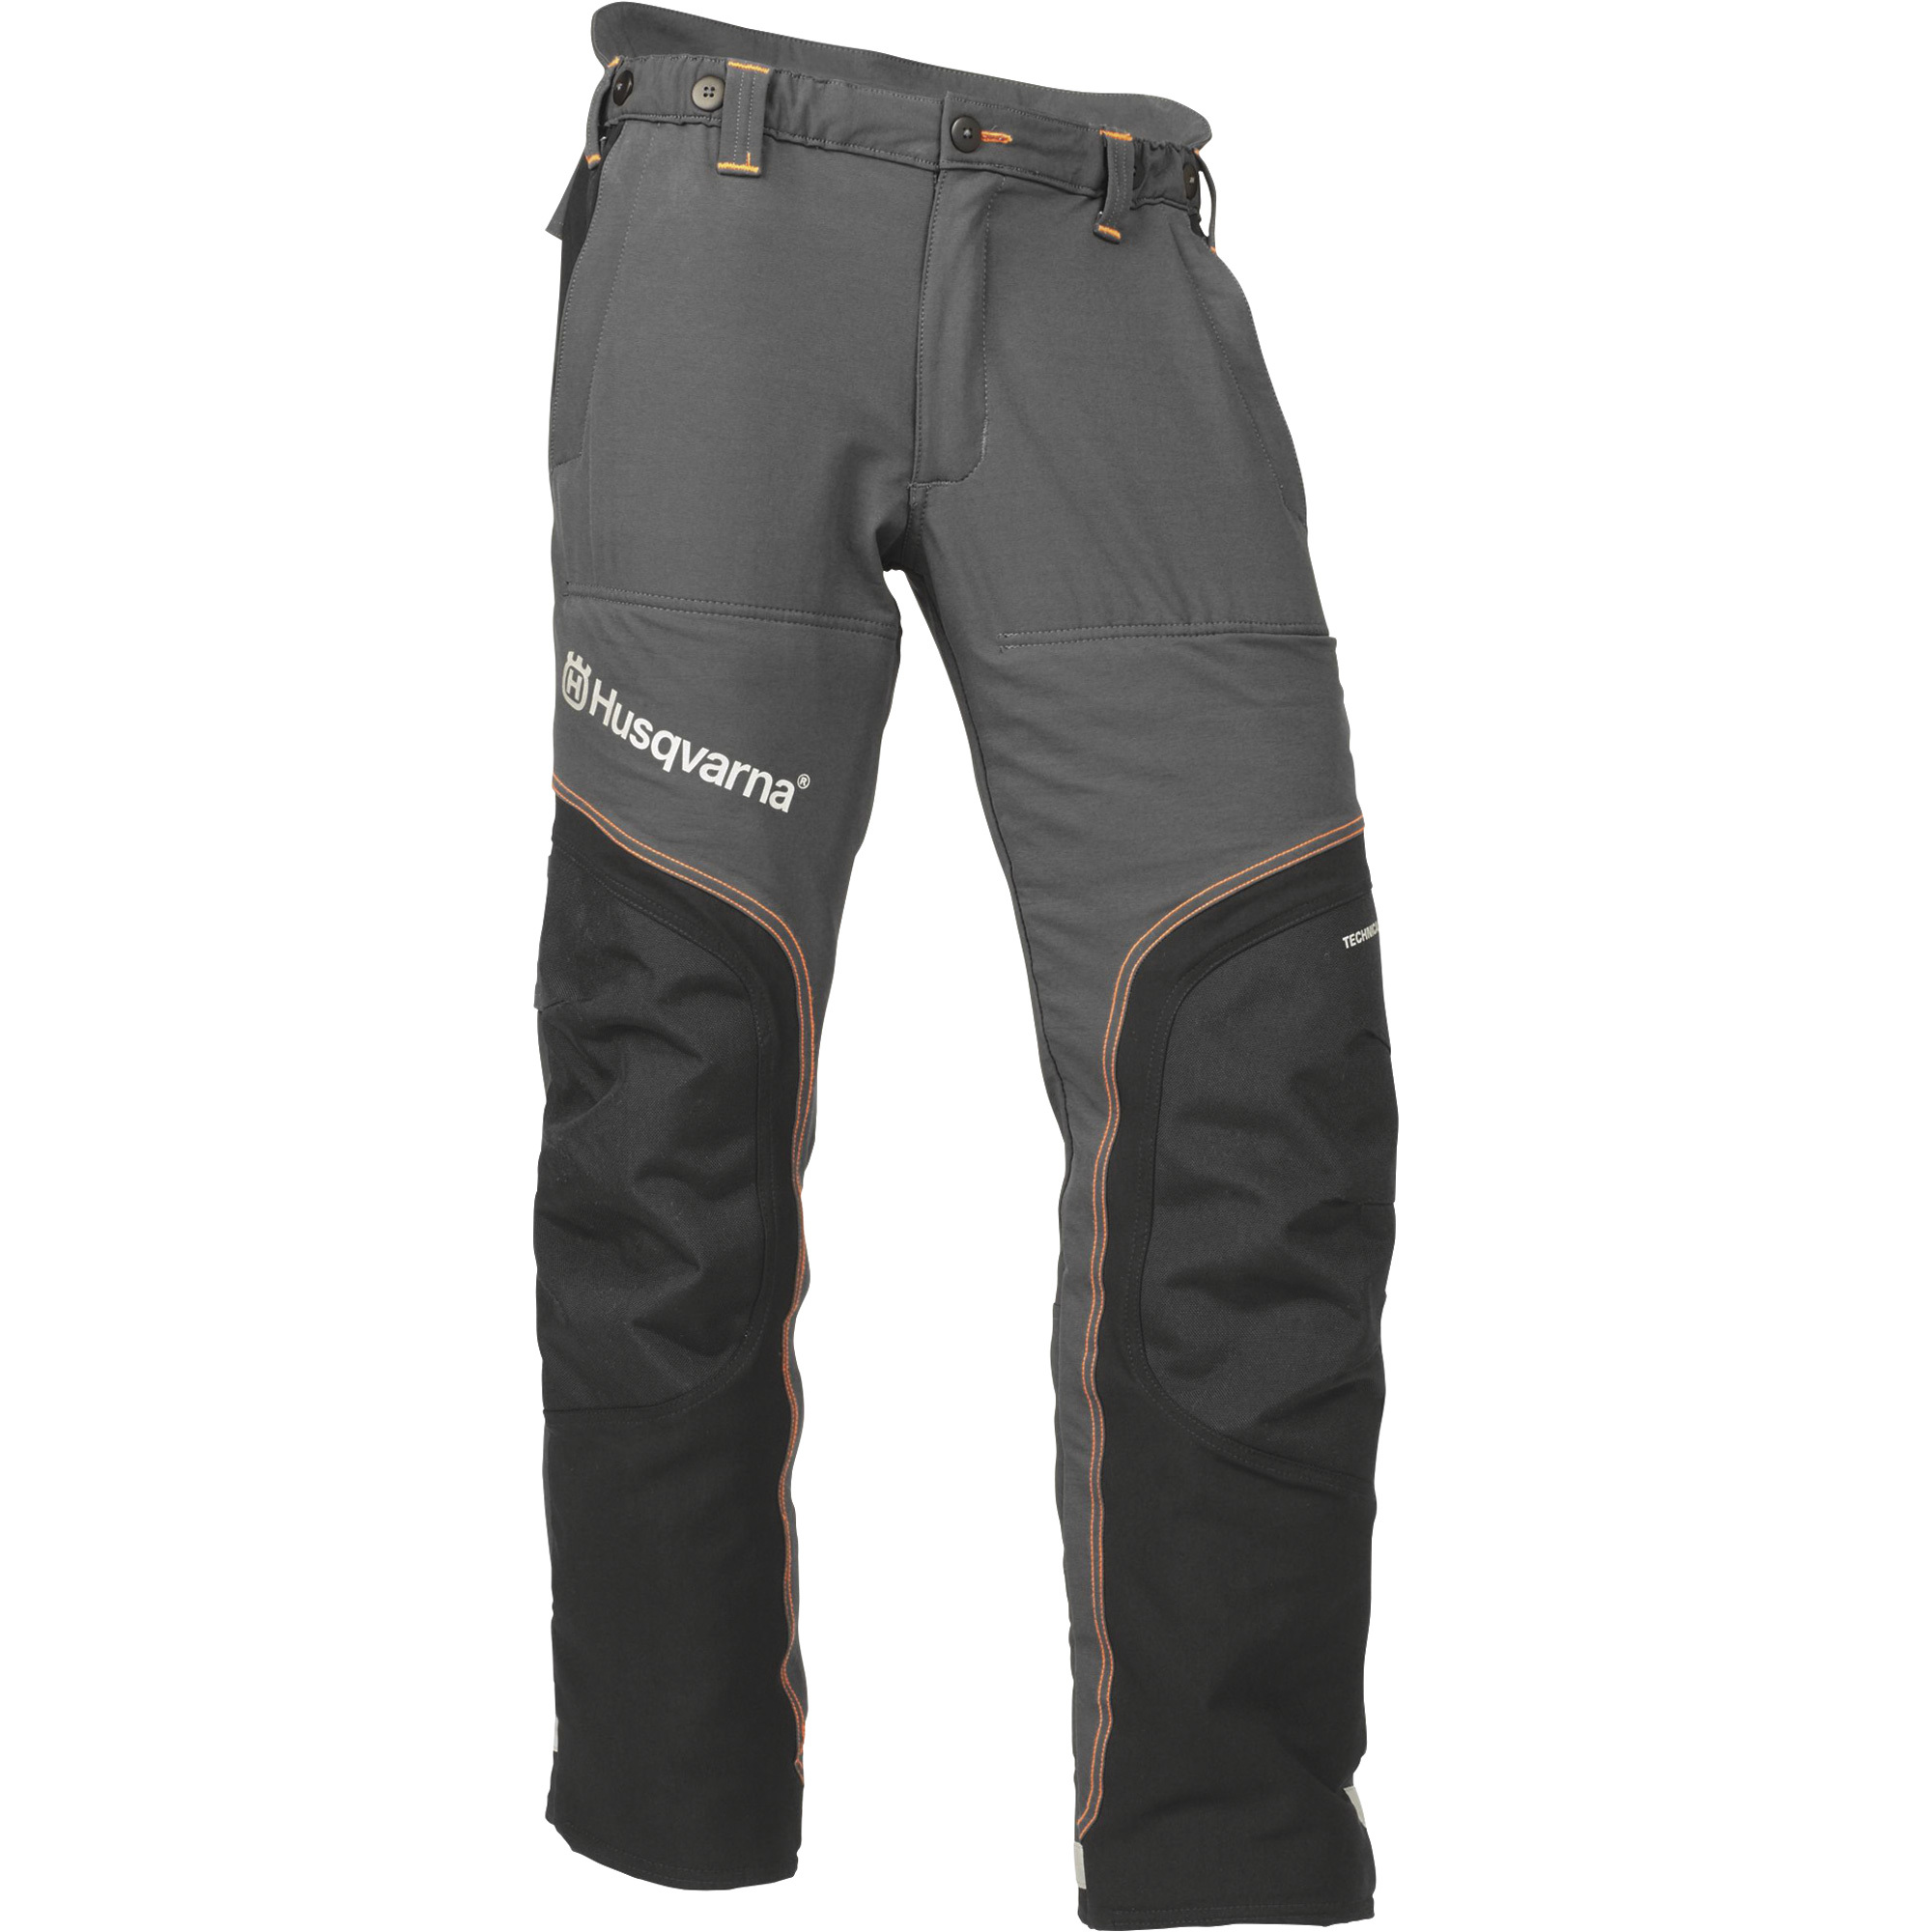 Husqvarna Technical Lo-Viz Protective Pants â Medium, Gray